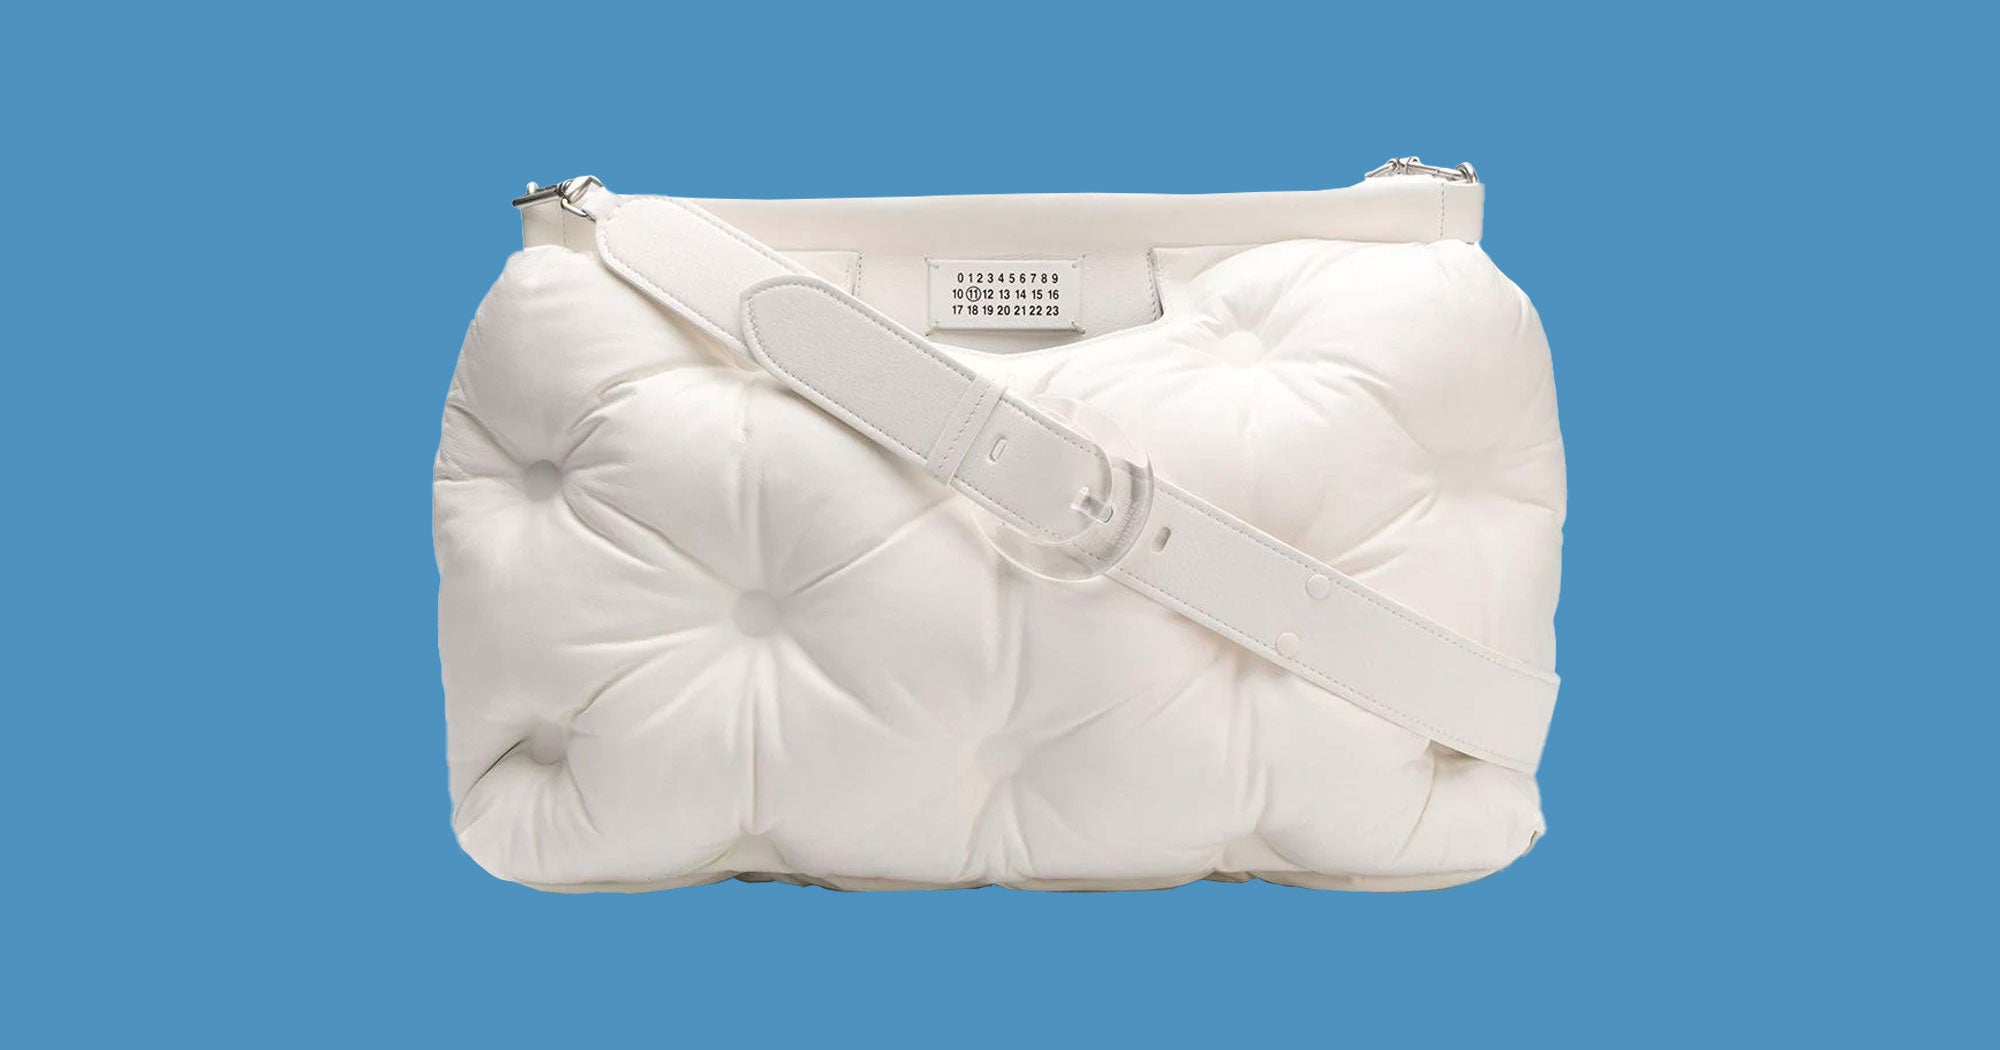 Purse Pillow for Celine Luggage Bag Models, Bag Shaper Pillow